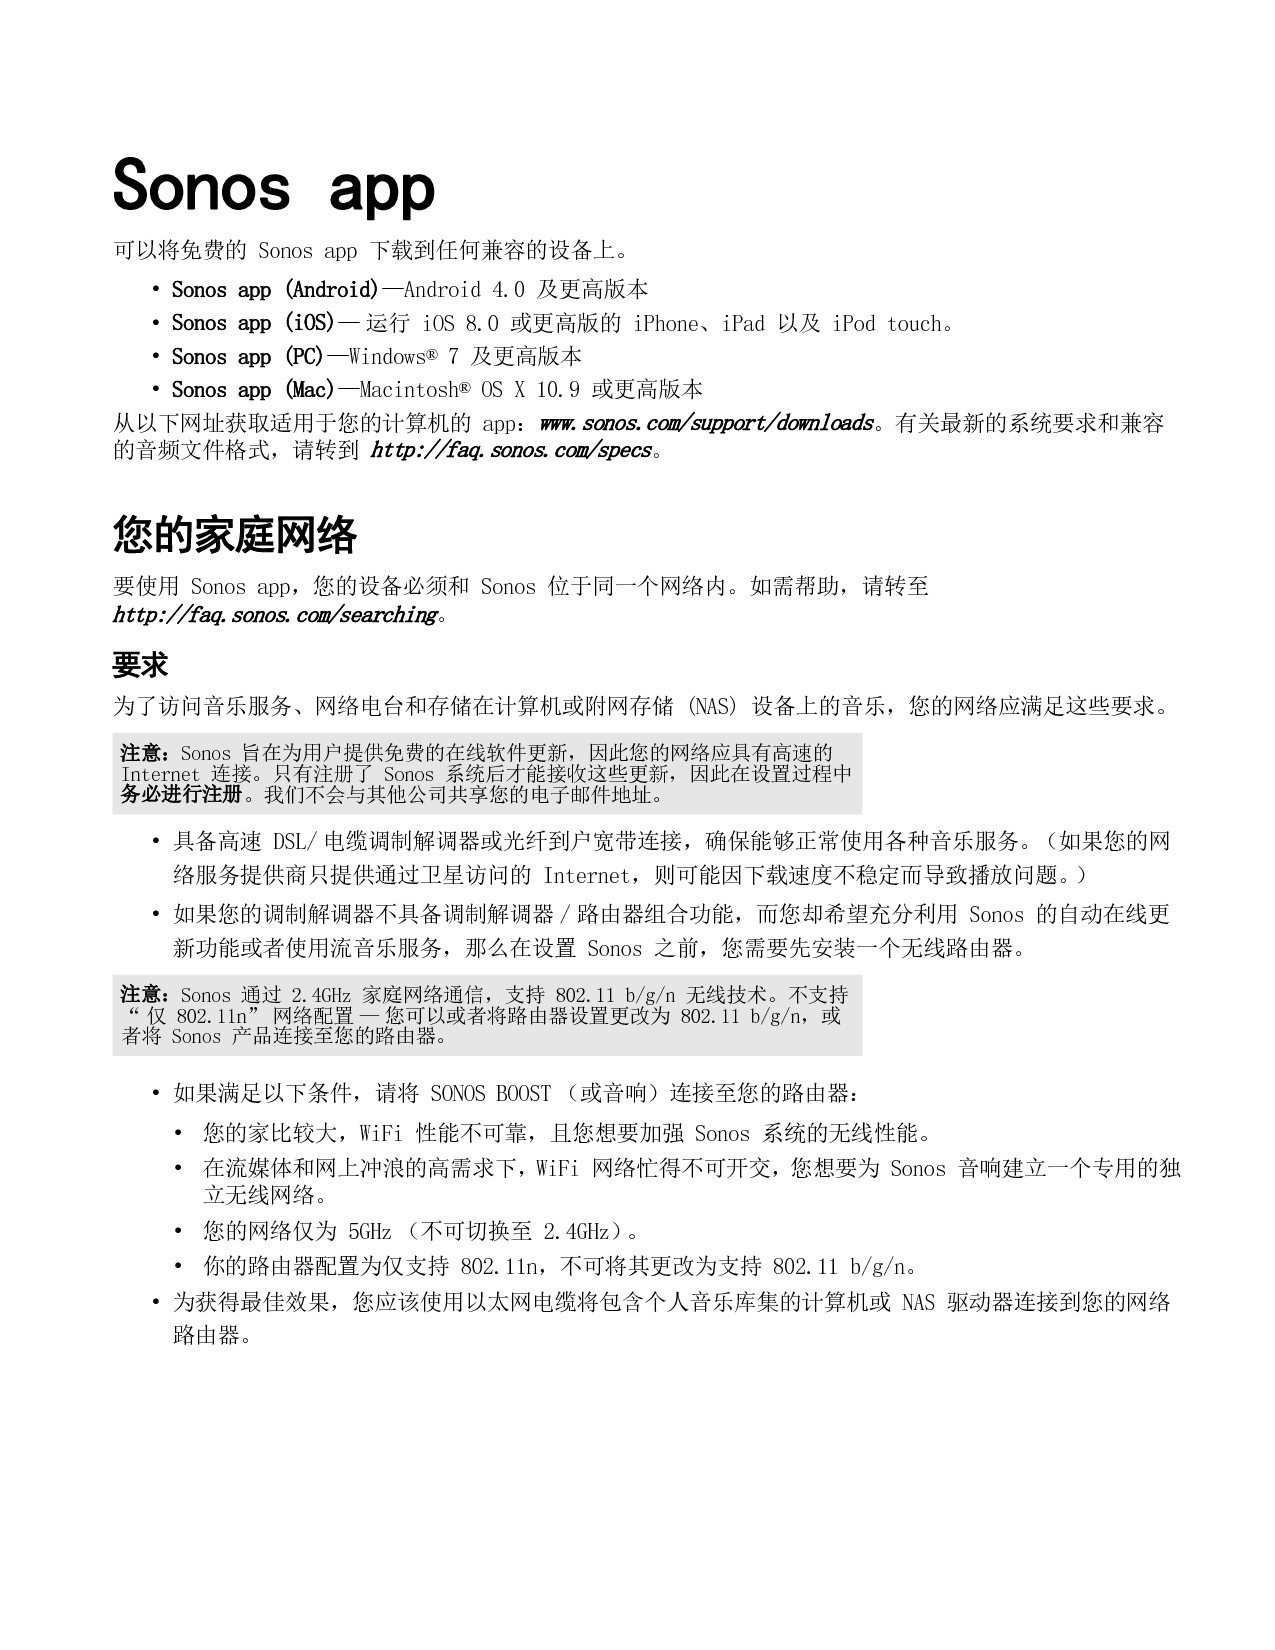 搜诺思 SONOS APP应用程序 Android安卓版 用户指南 第2页